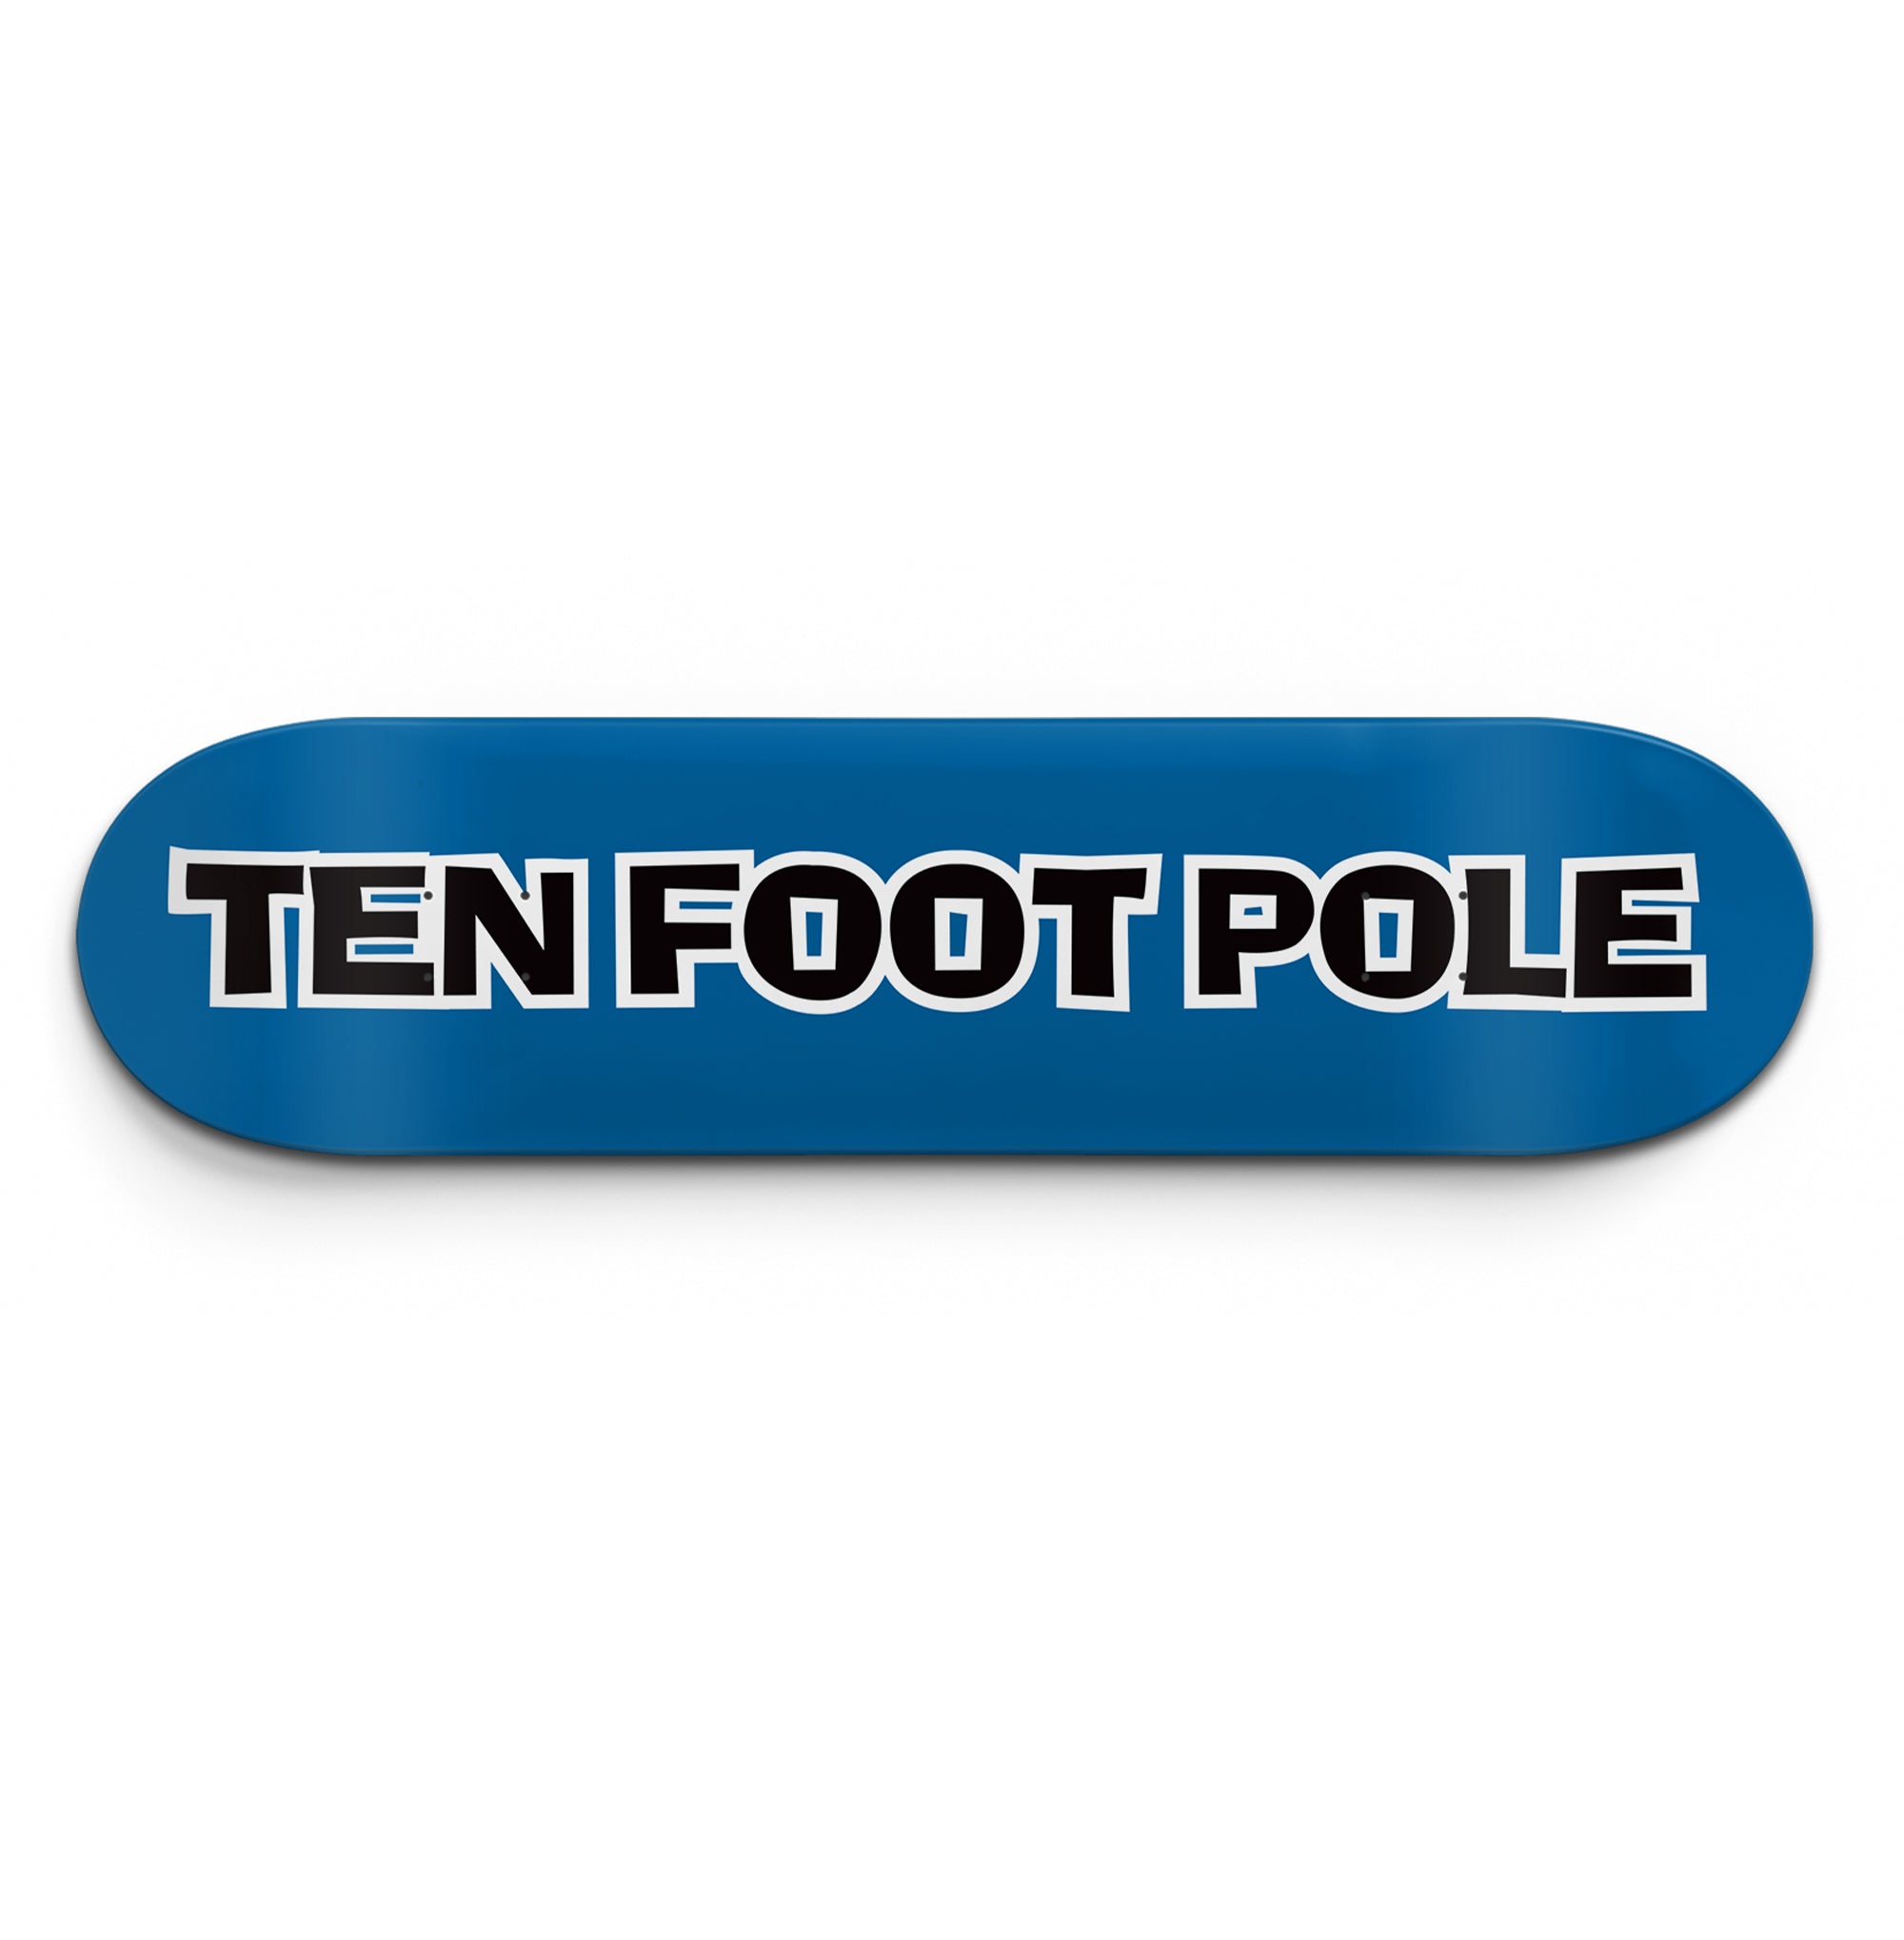 Ten Foot Pole - Satanic Surfers Skate Decks